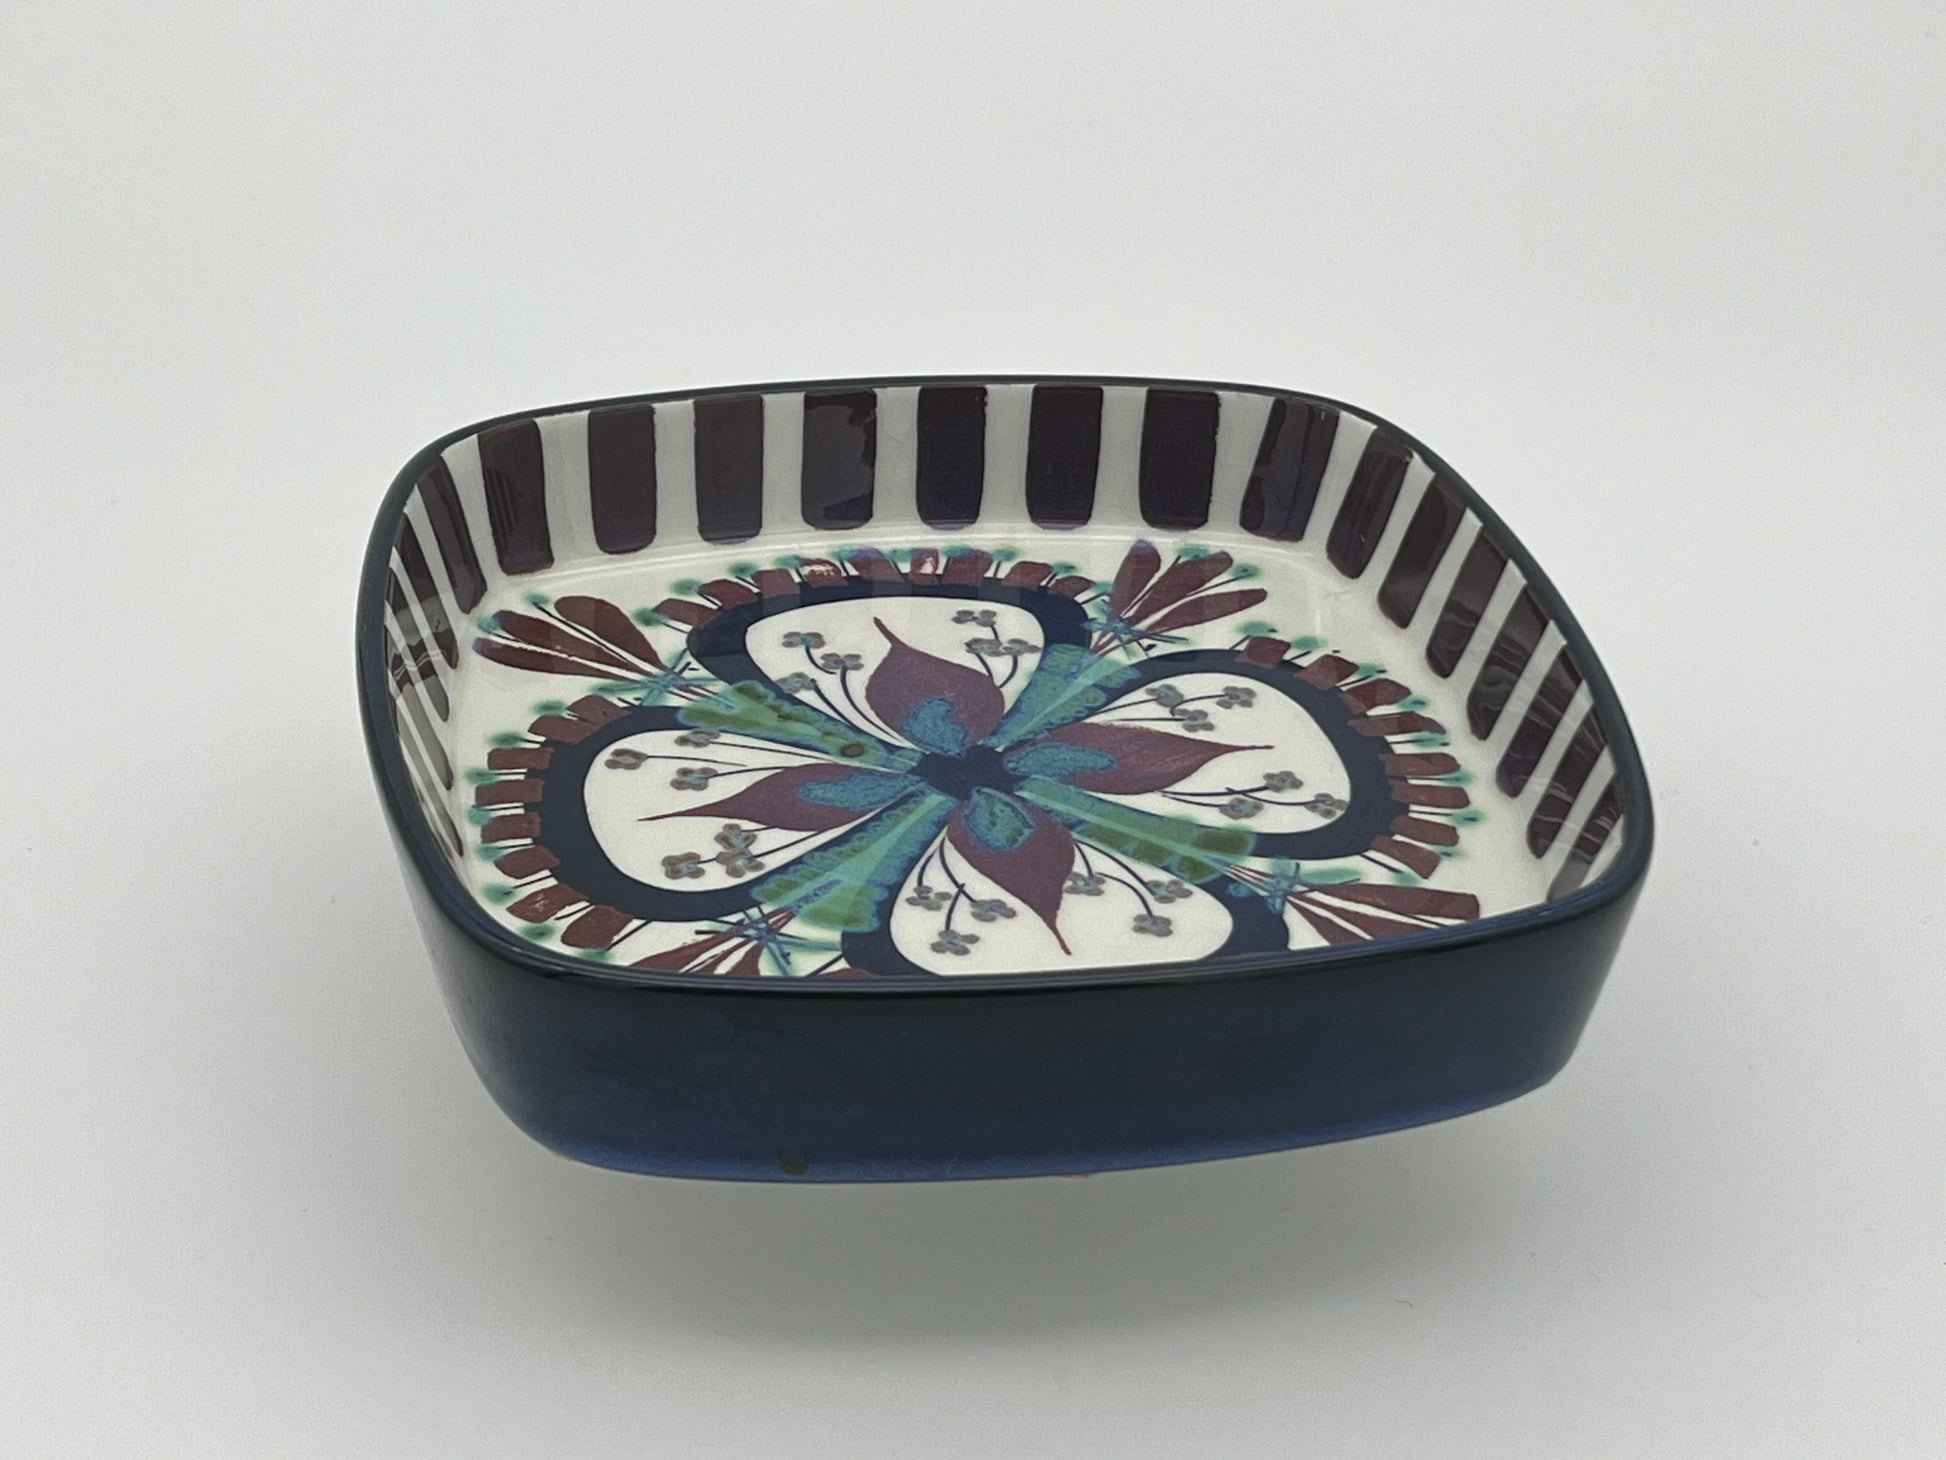 Royal Copenhagen - Marianne Johnson - Bowl - 174/2883 - 17x17cm - cute bowl - vintage bowl - Scandinapan